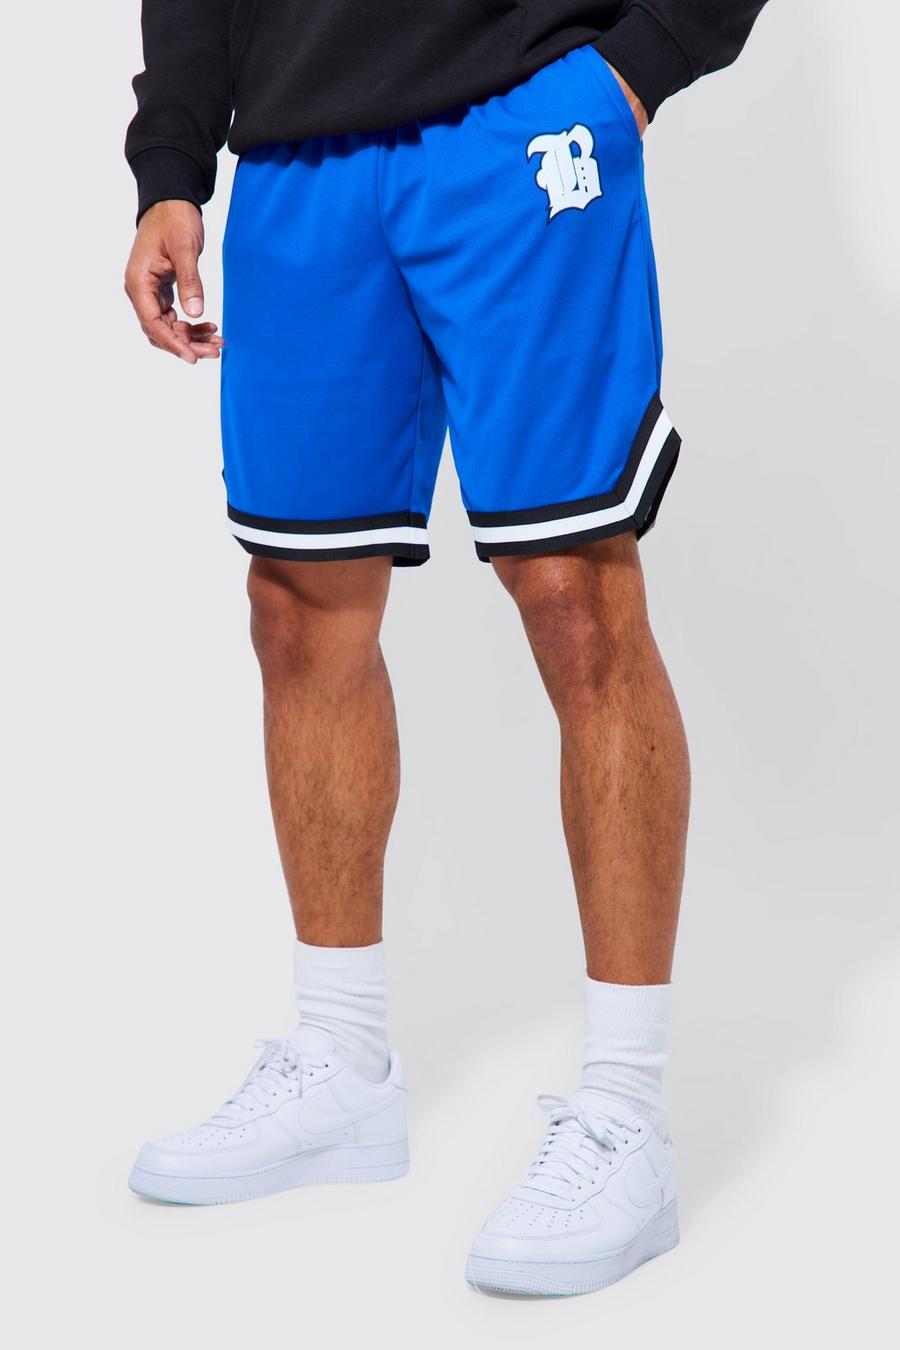 Lockere mittellange Basketball-Shorts, Royal blau